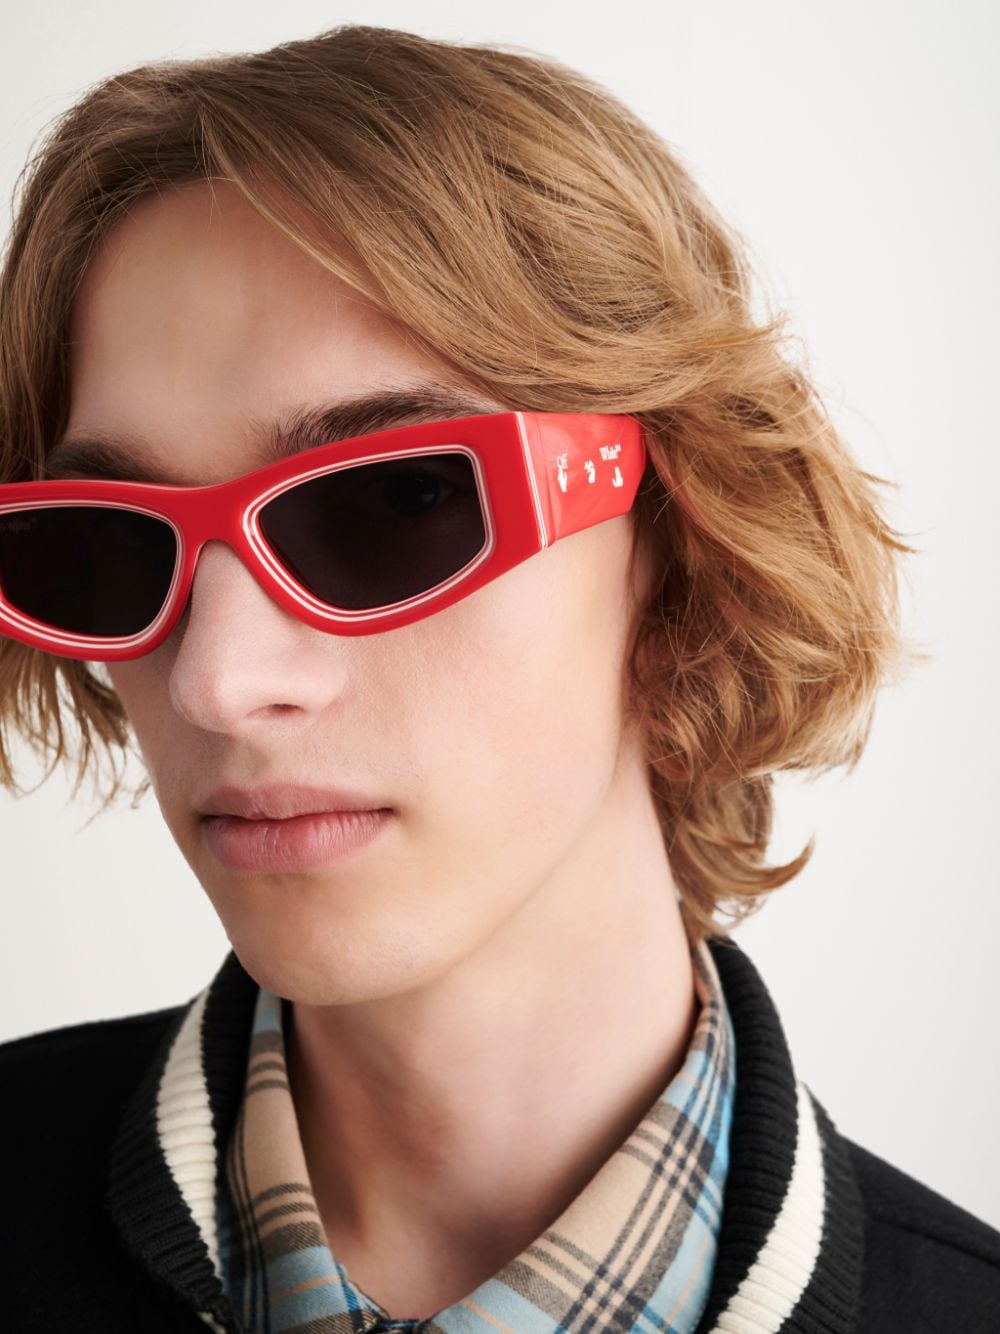 Andy rectangular-frame sunglasses